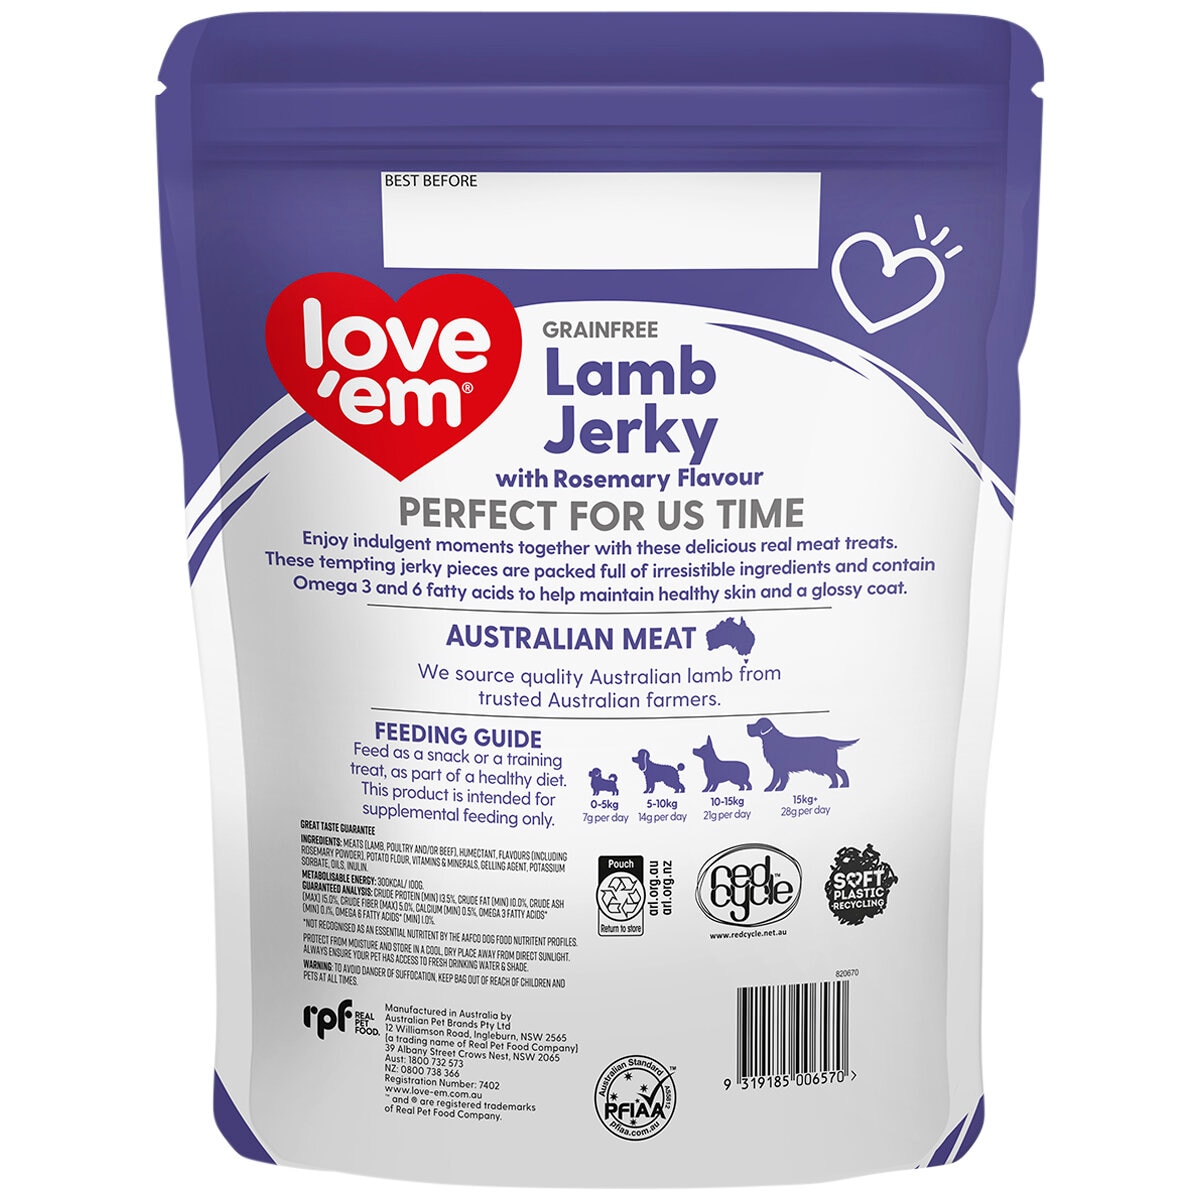 Love'em Grain Free Lamb Jerky 2 x 1 kg